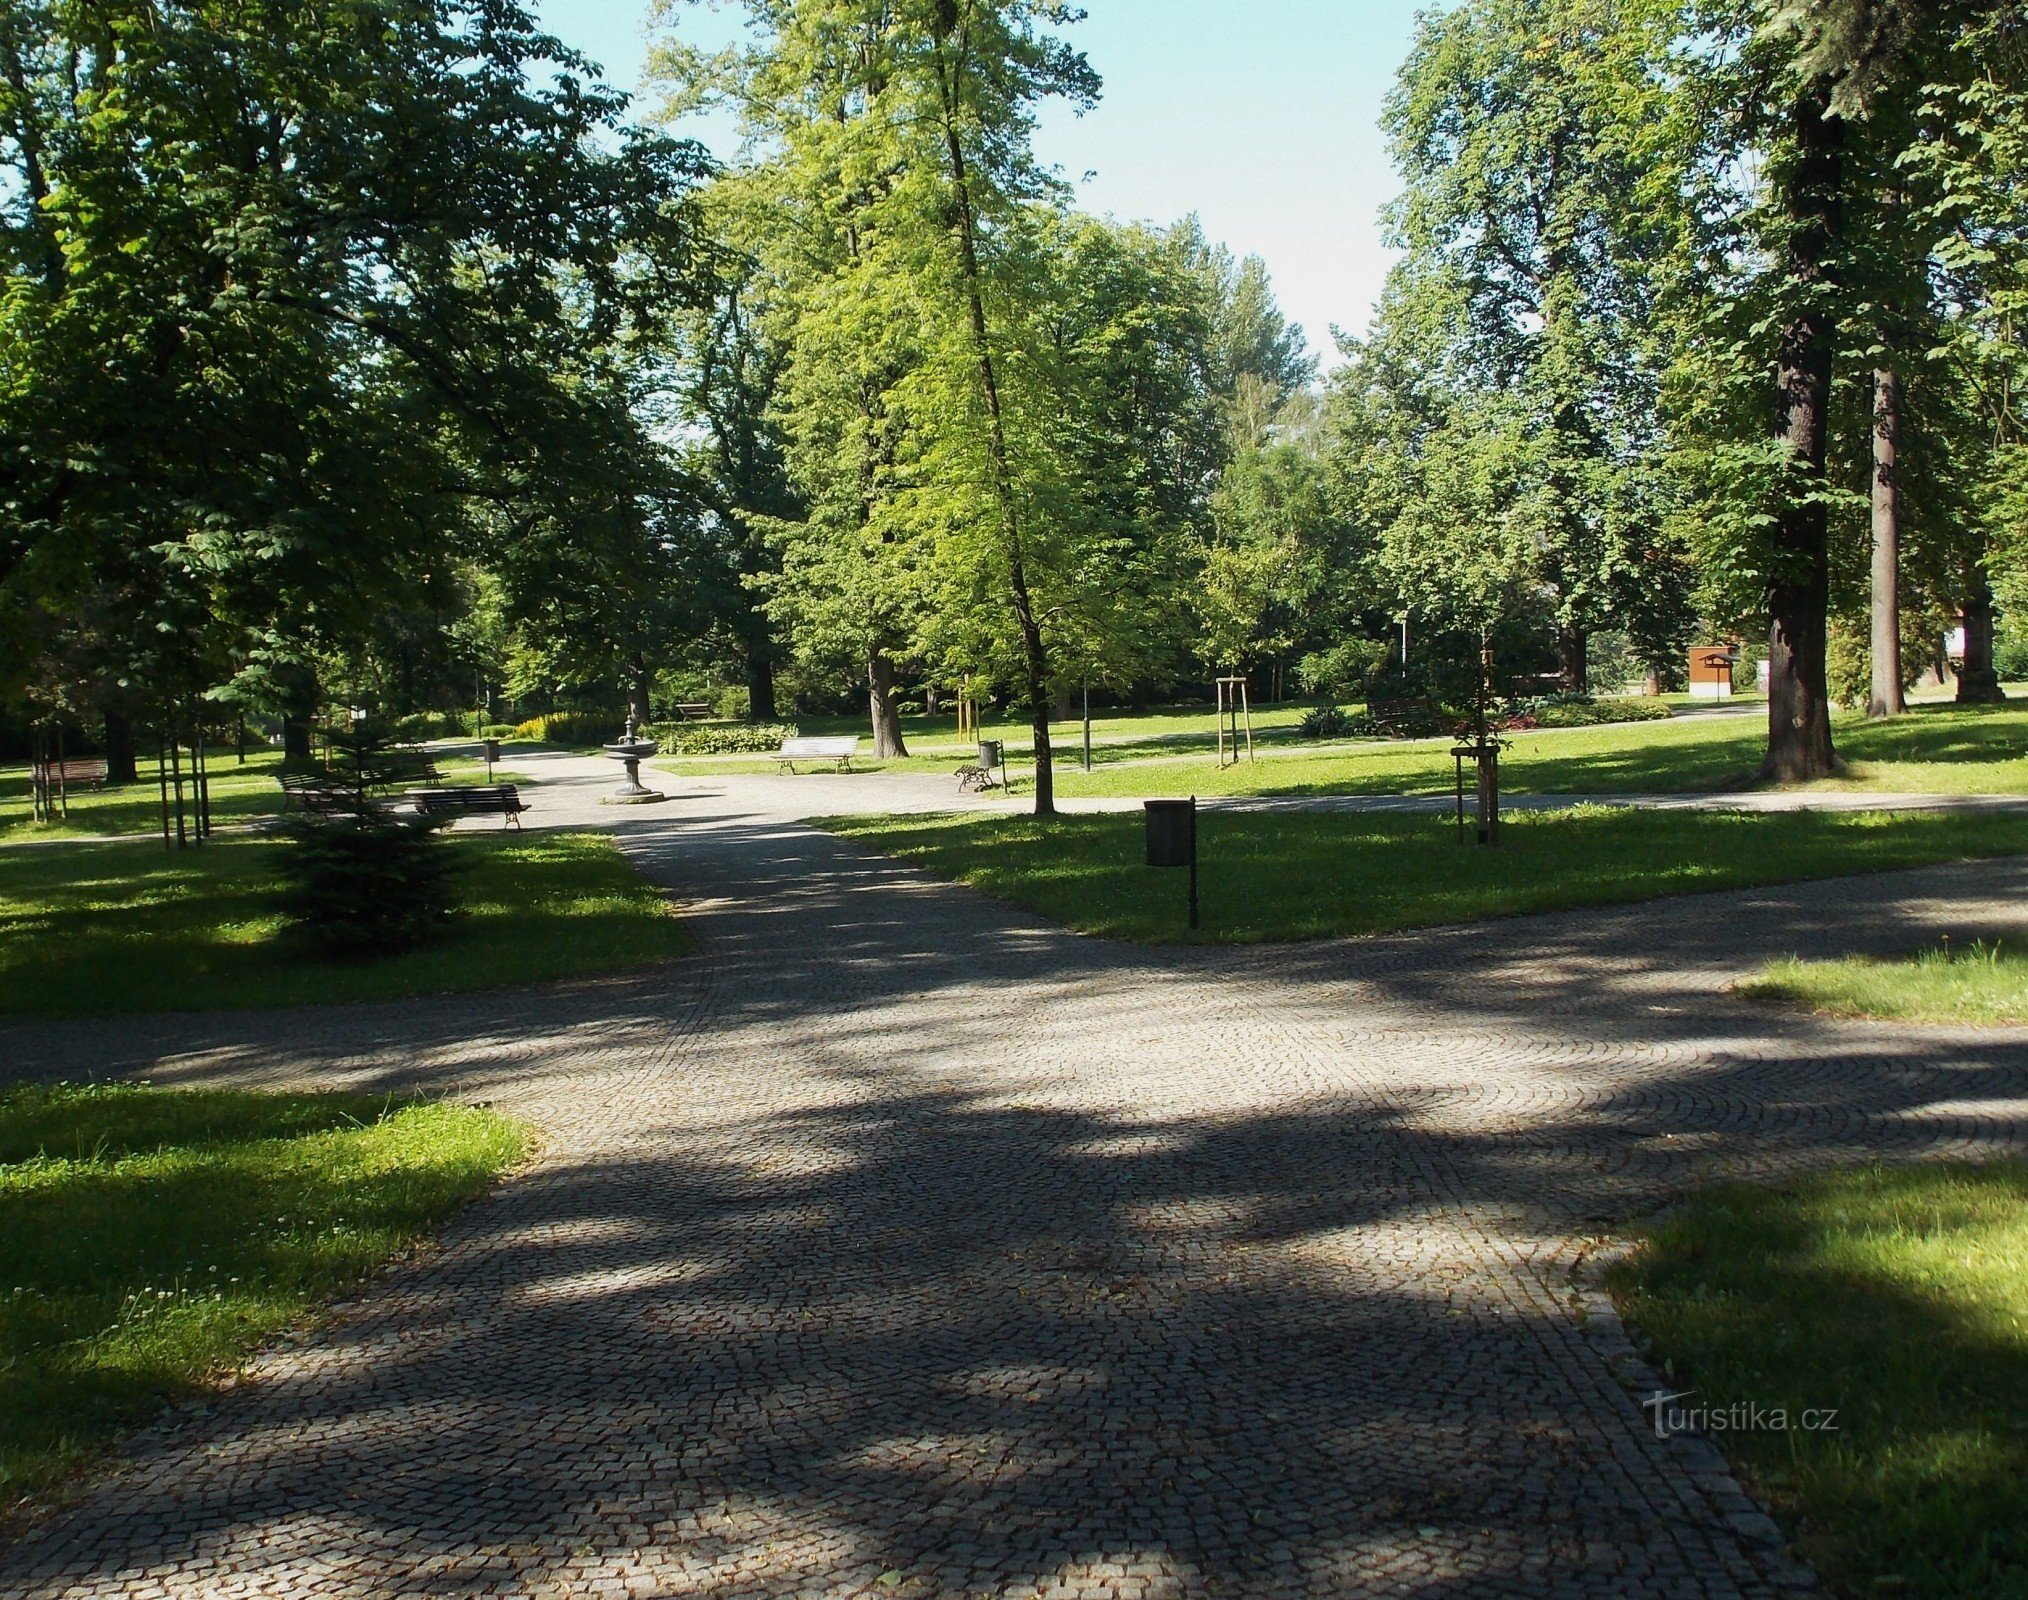 JA Comeniuspark in Frýdek